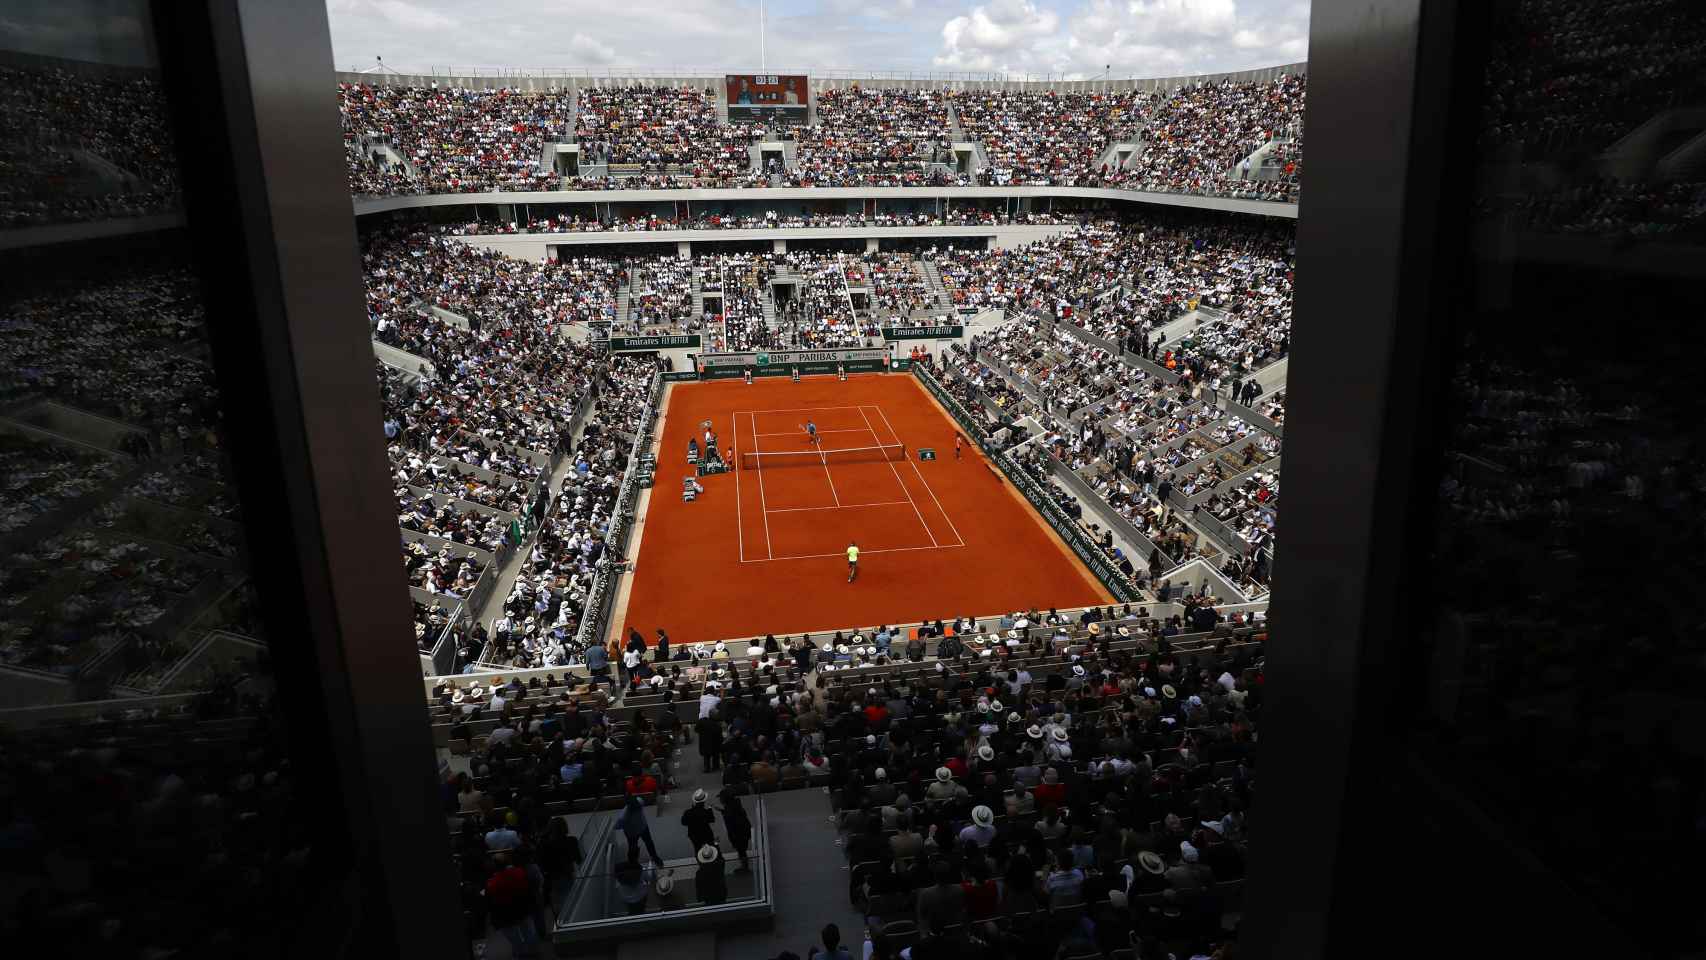 La pista central de Roland Garros, la Philippe-Chatrier, lista para la final